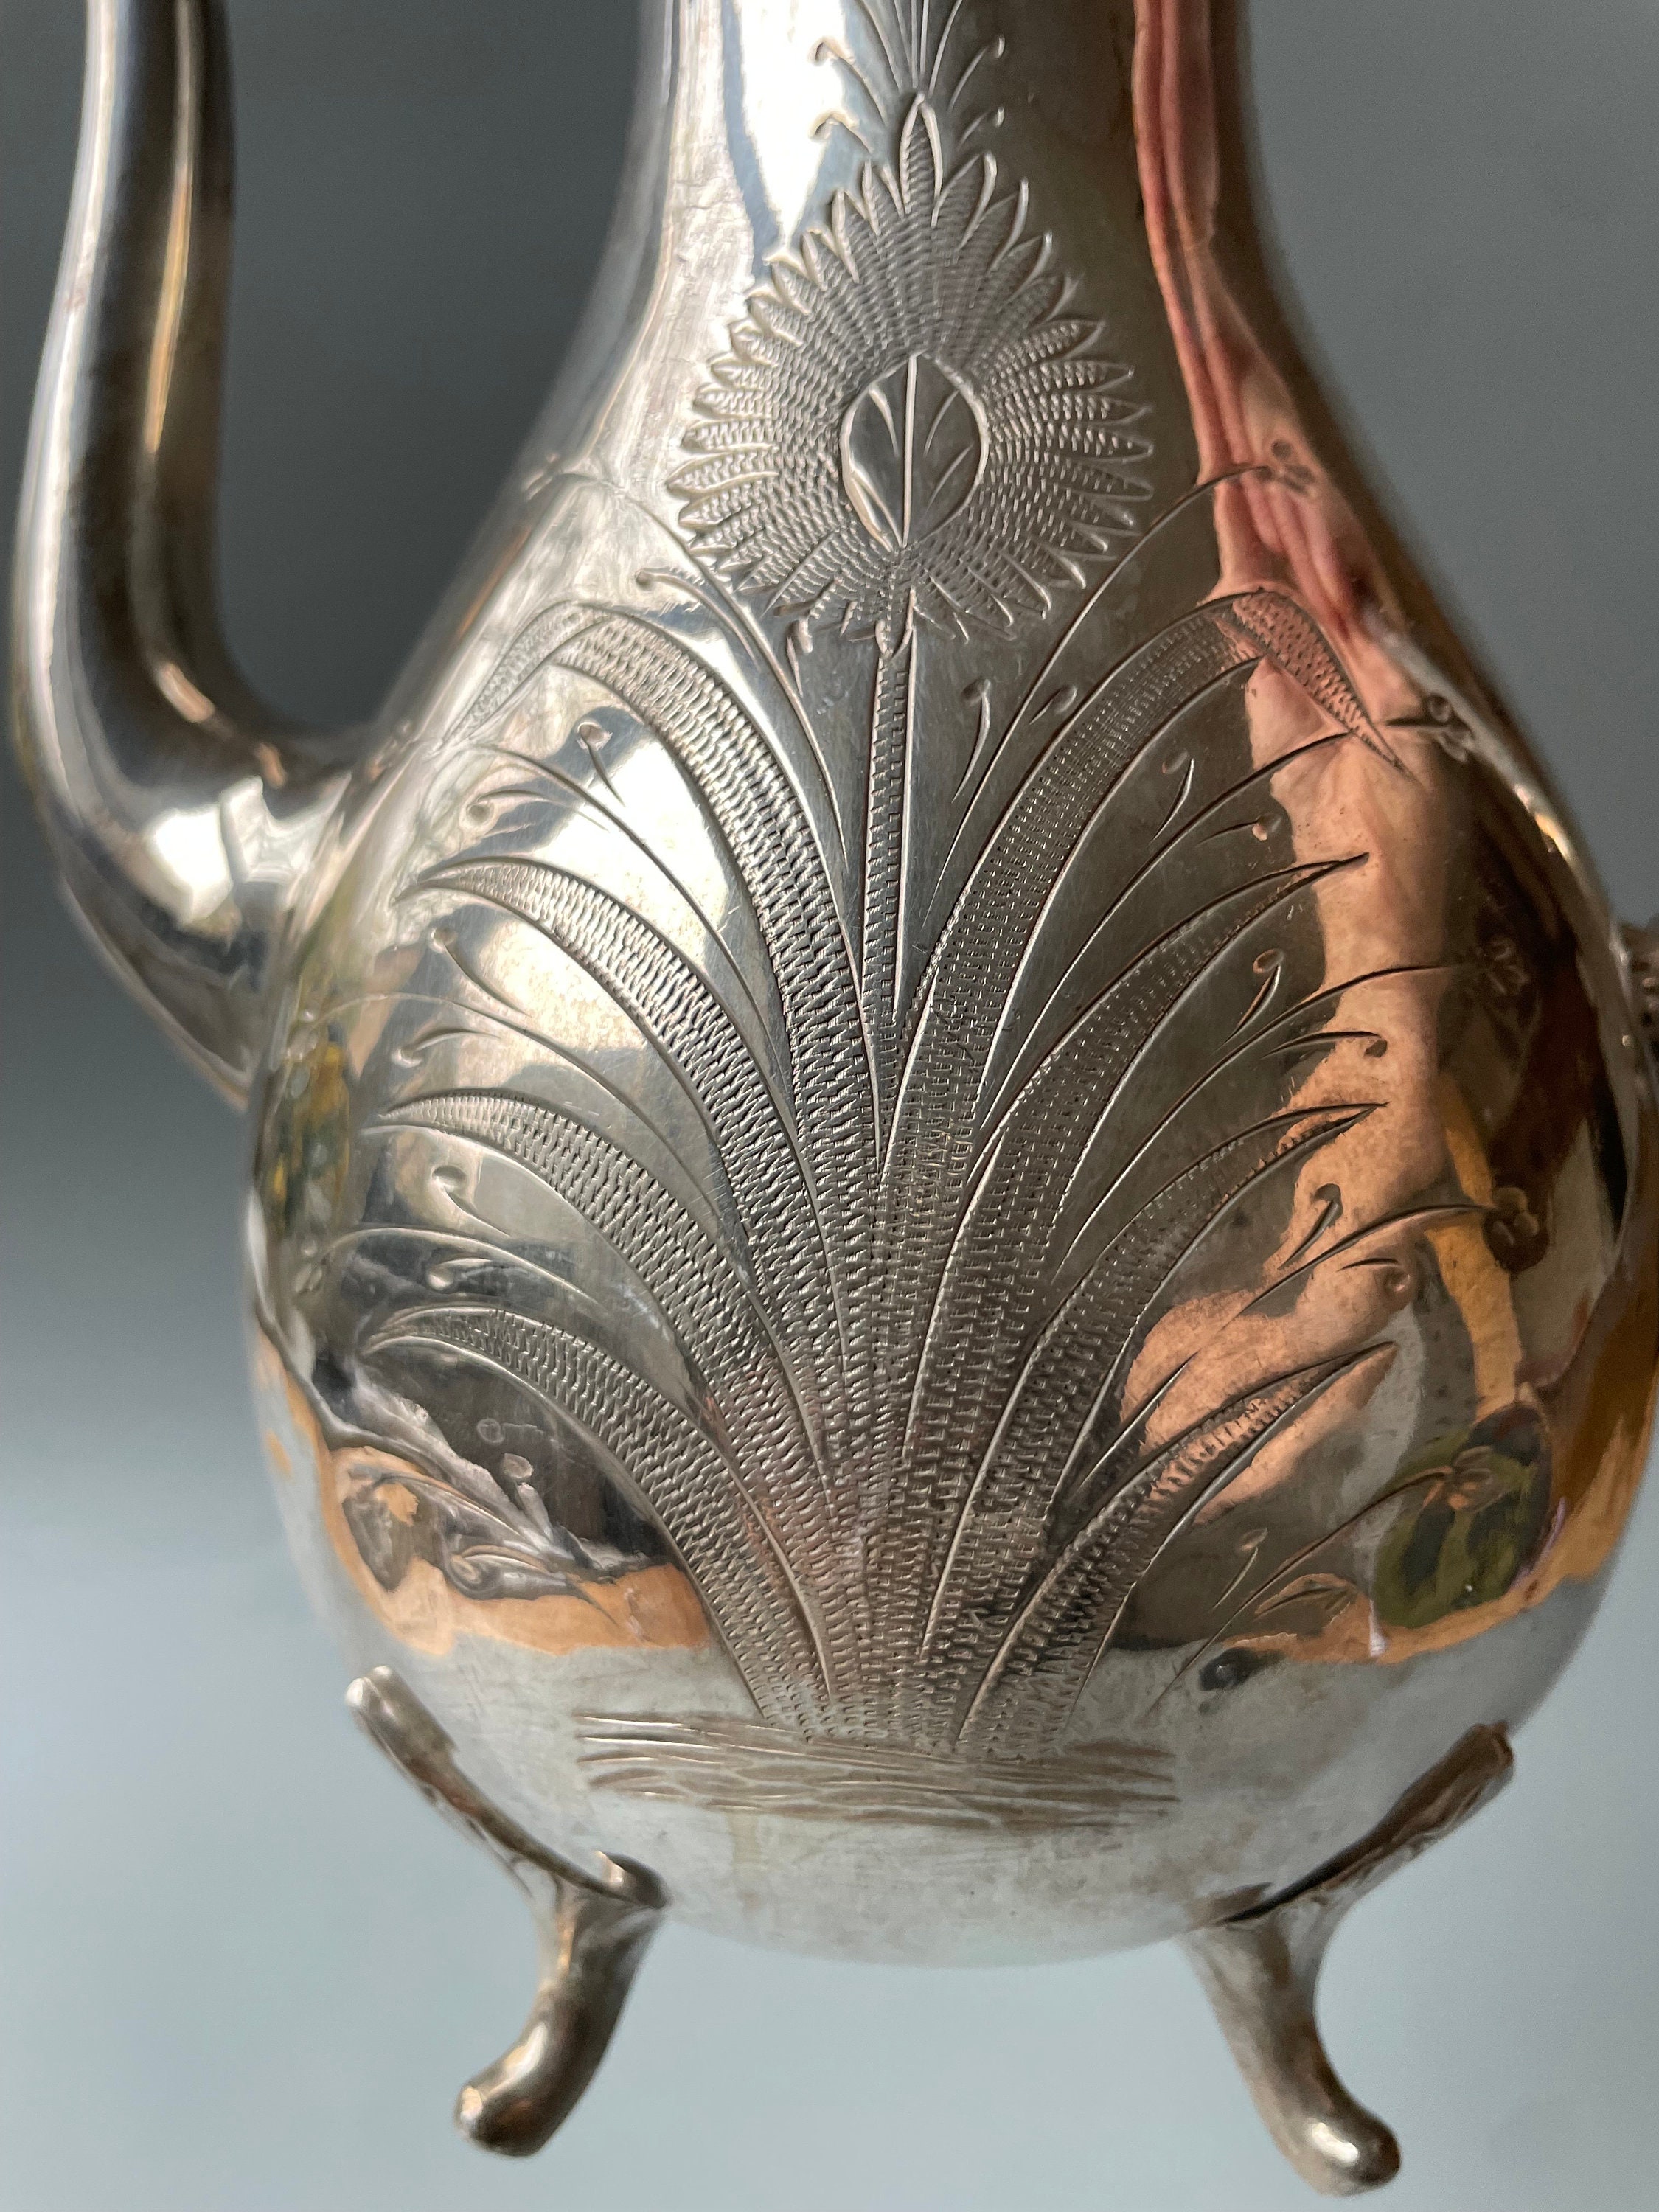 Antique Ornate Metal Teapot / Decorative Lid and Handle / Engraved /  Serveware / Pitcher / Vase / Home Decor / Display / Storage 